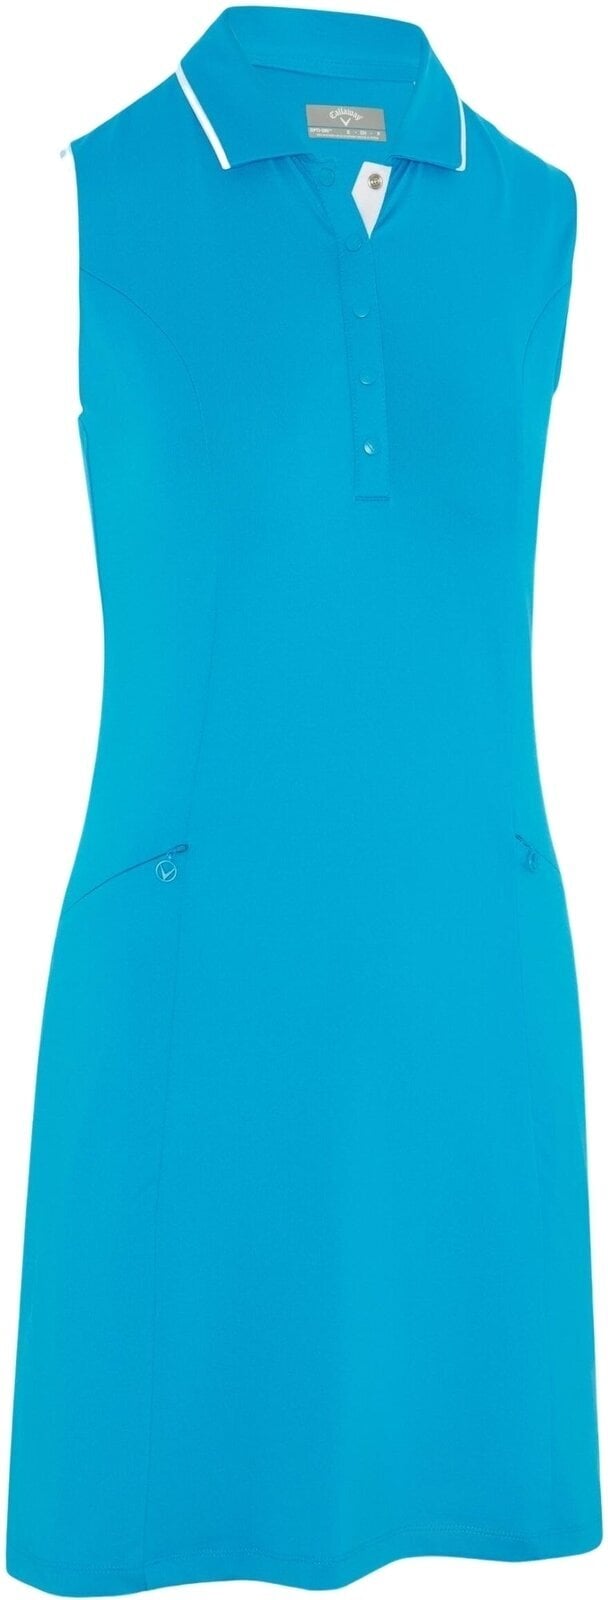 Saia/Vestido Callaway Womens Sleeveless Dress With Snap Placket Vivid Blue XS